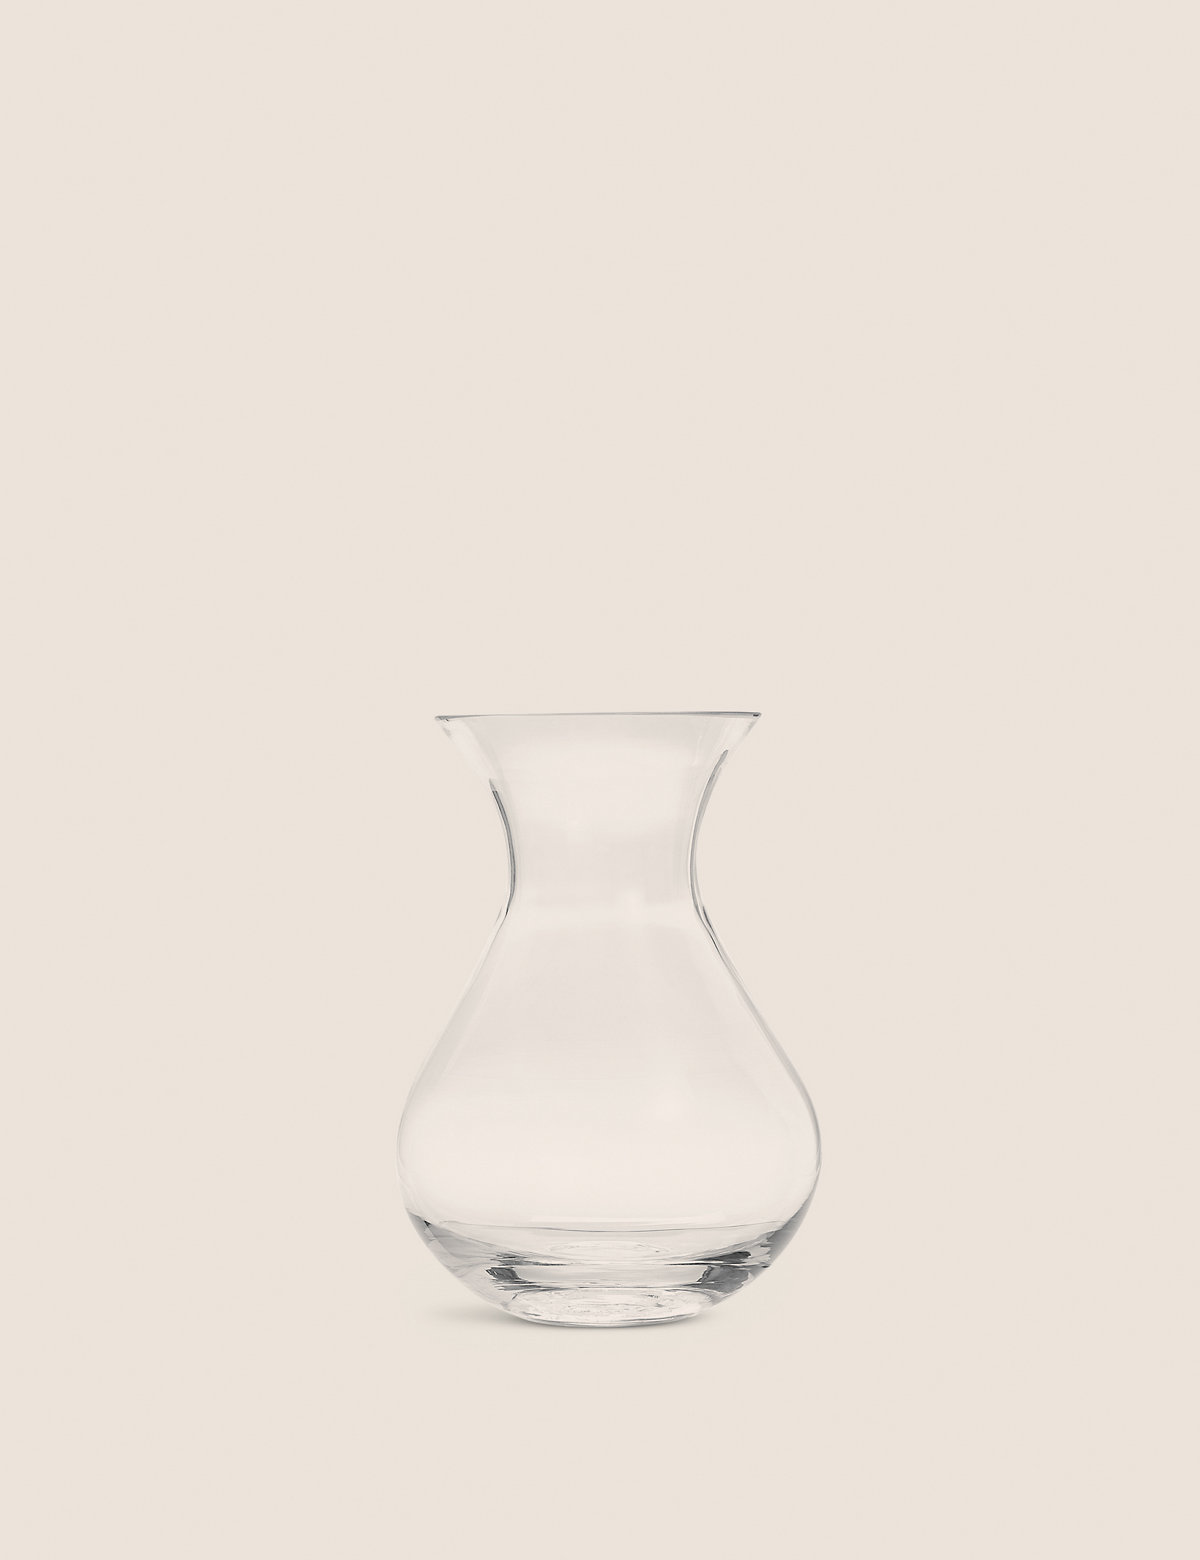 Small Bouquet Vase